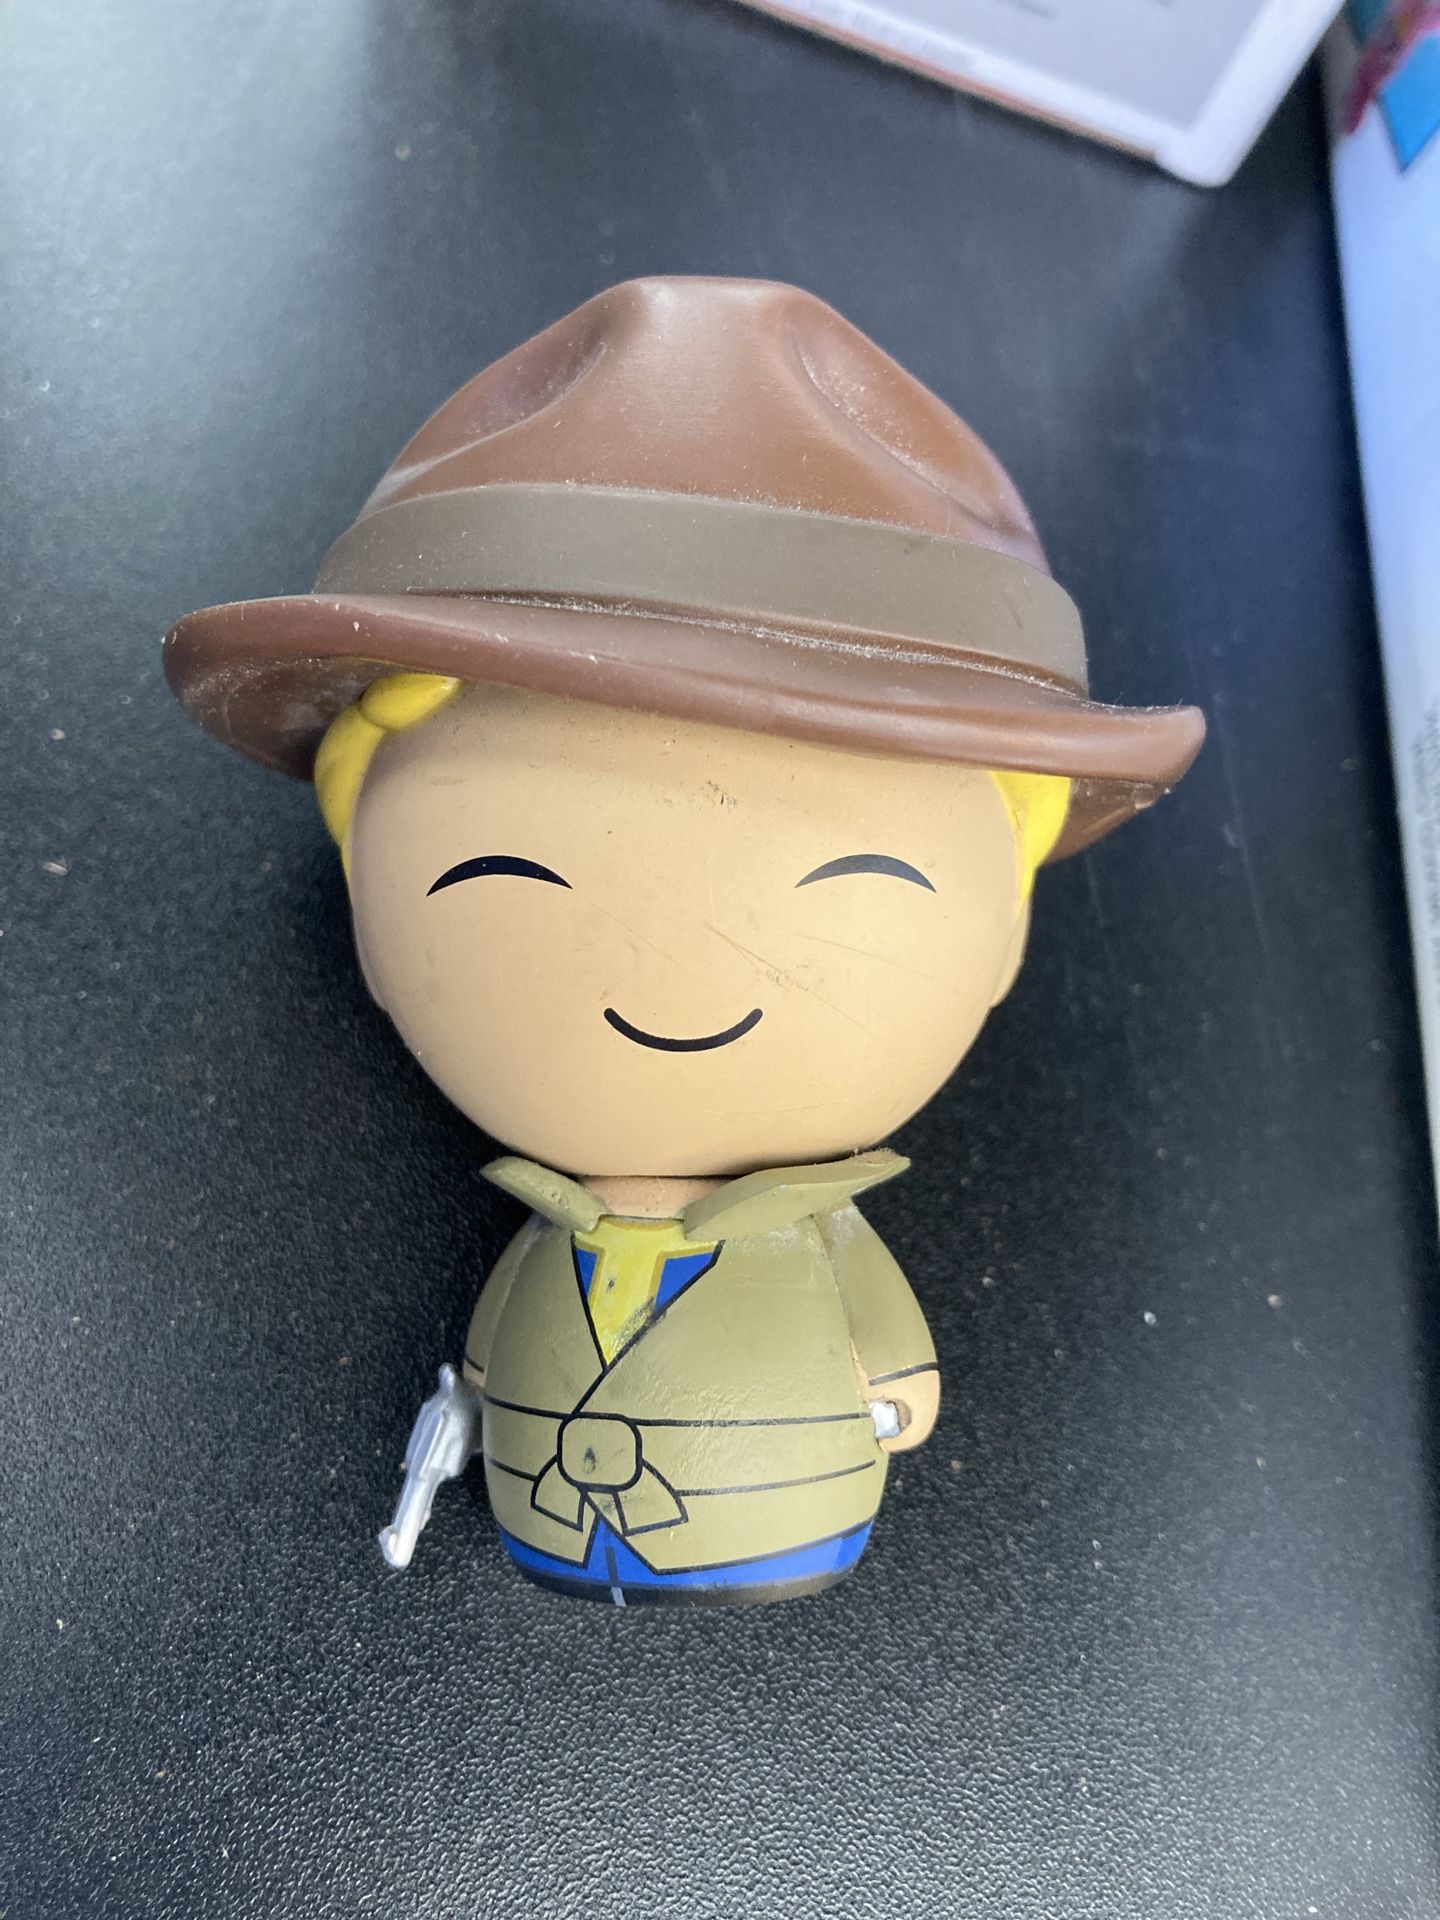 Funko Pop Dorbz Fallout Vault Boy Mysterious Stranger Toy Figures Hat